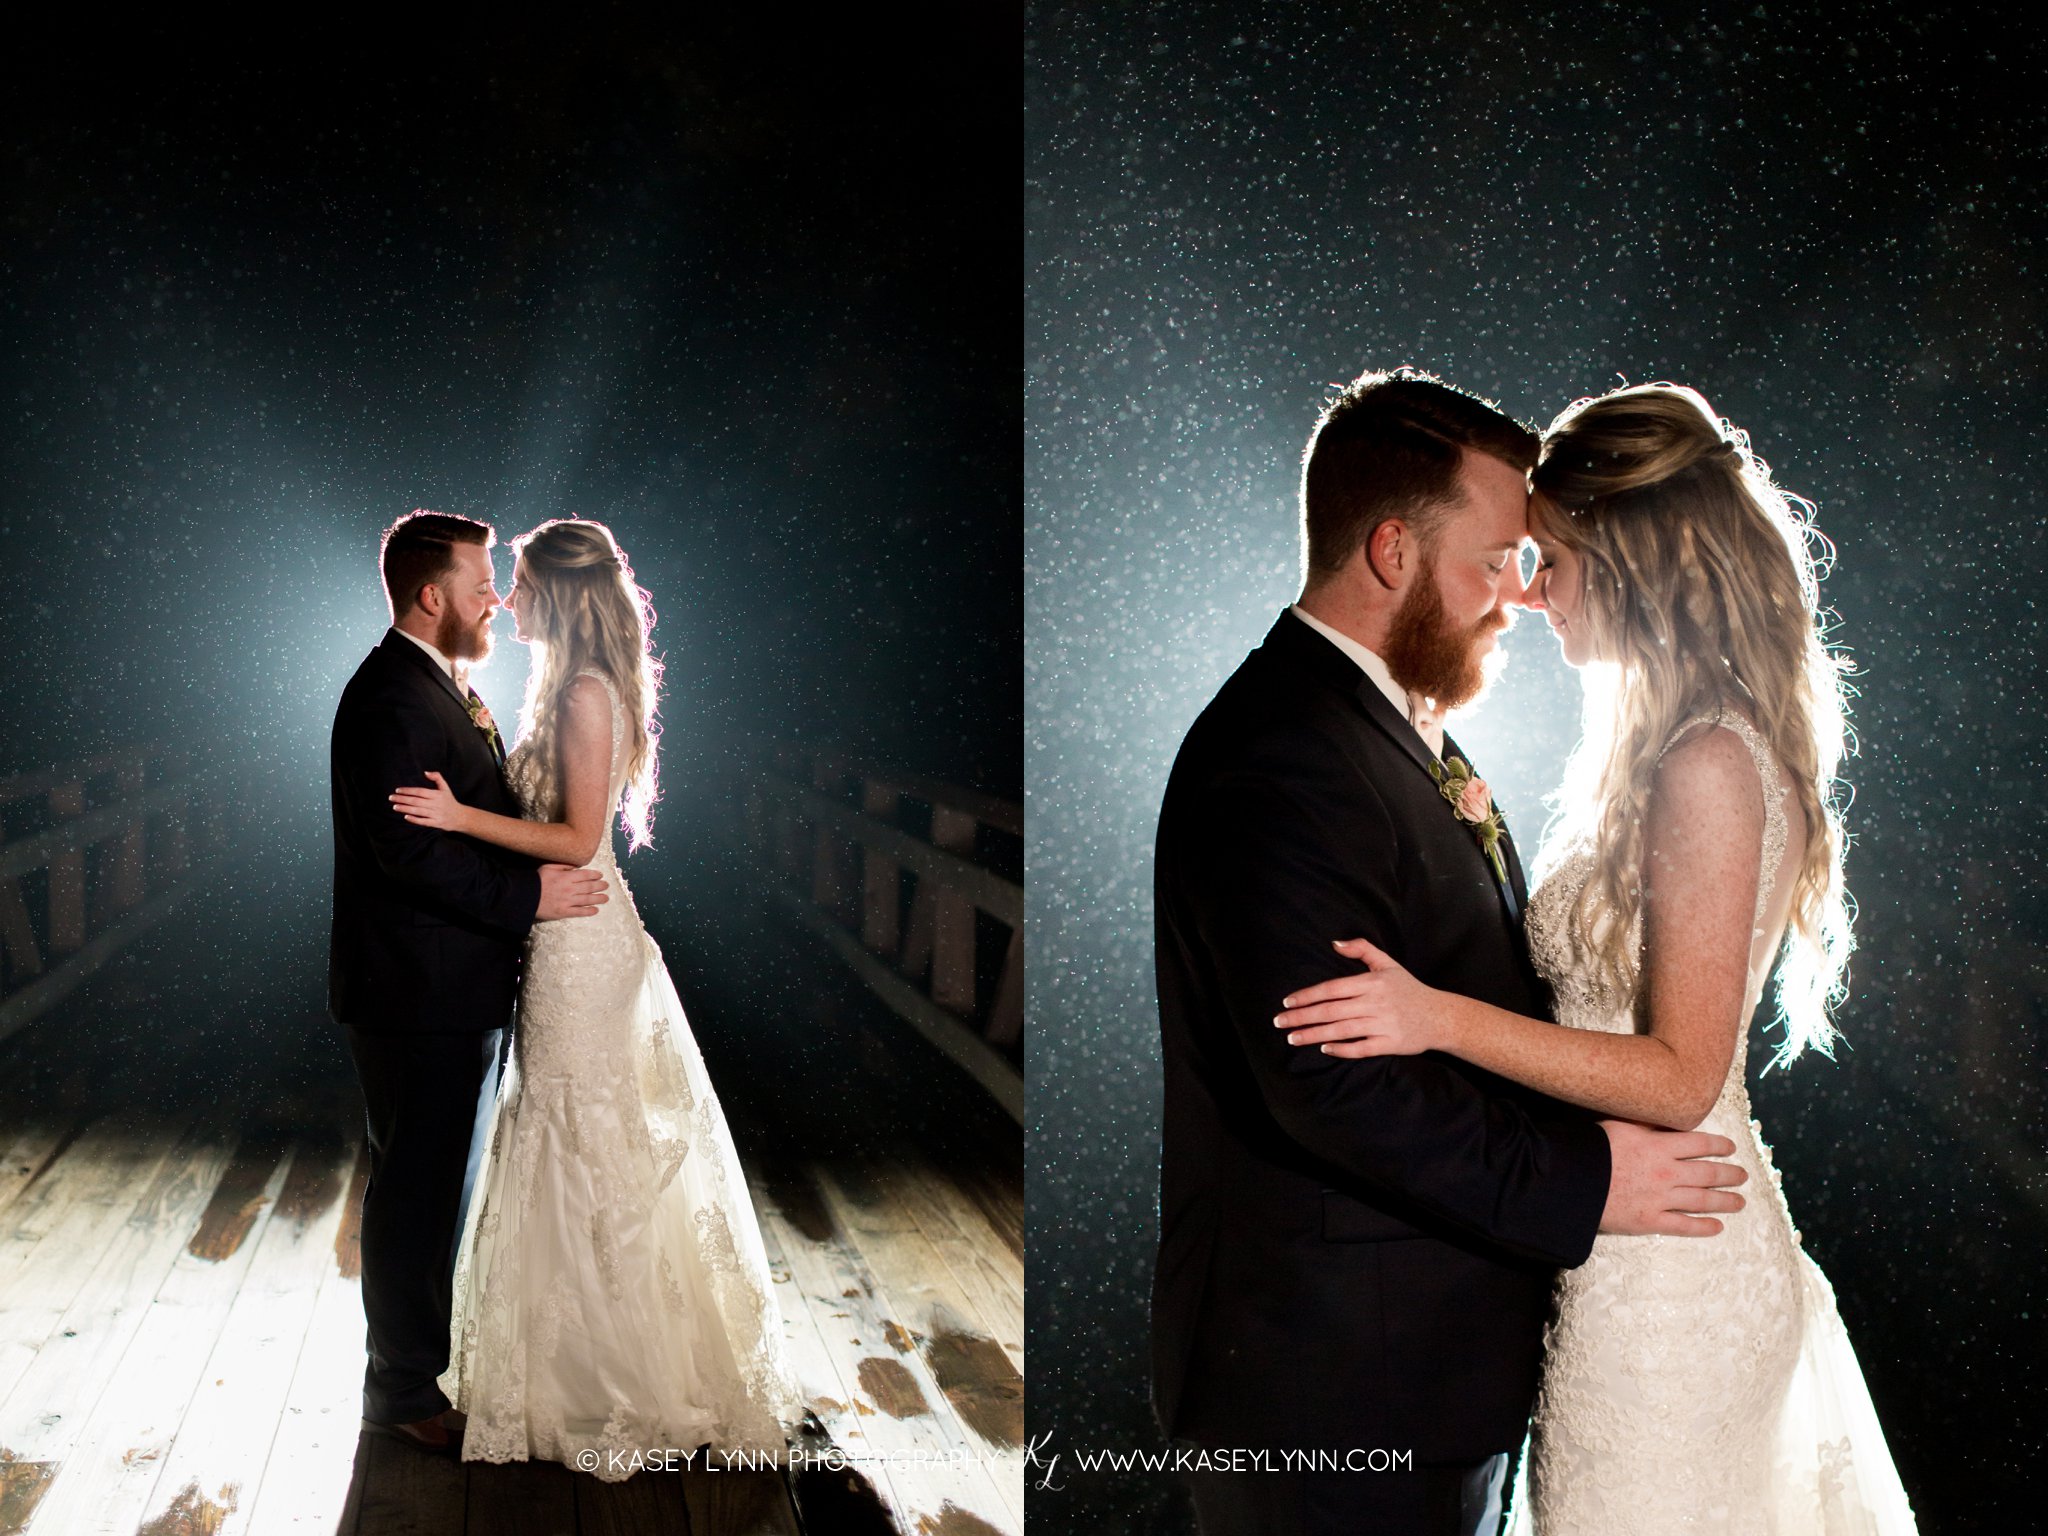 Night time wedding portraits / Kasey Lynn Photography